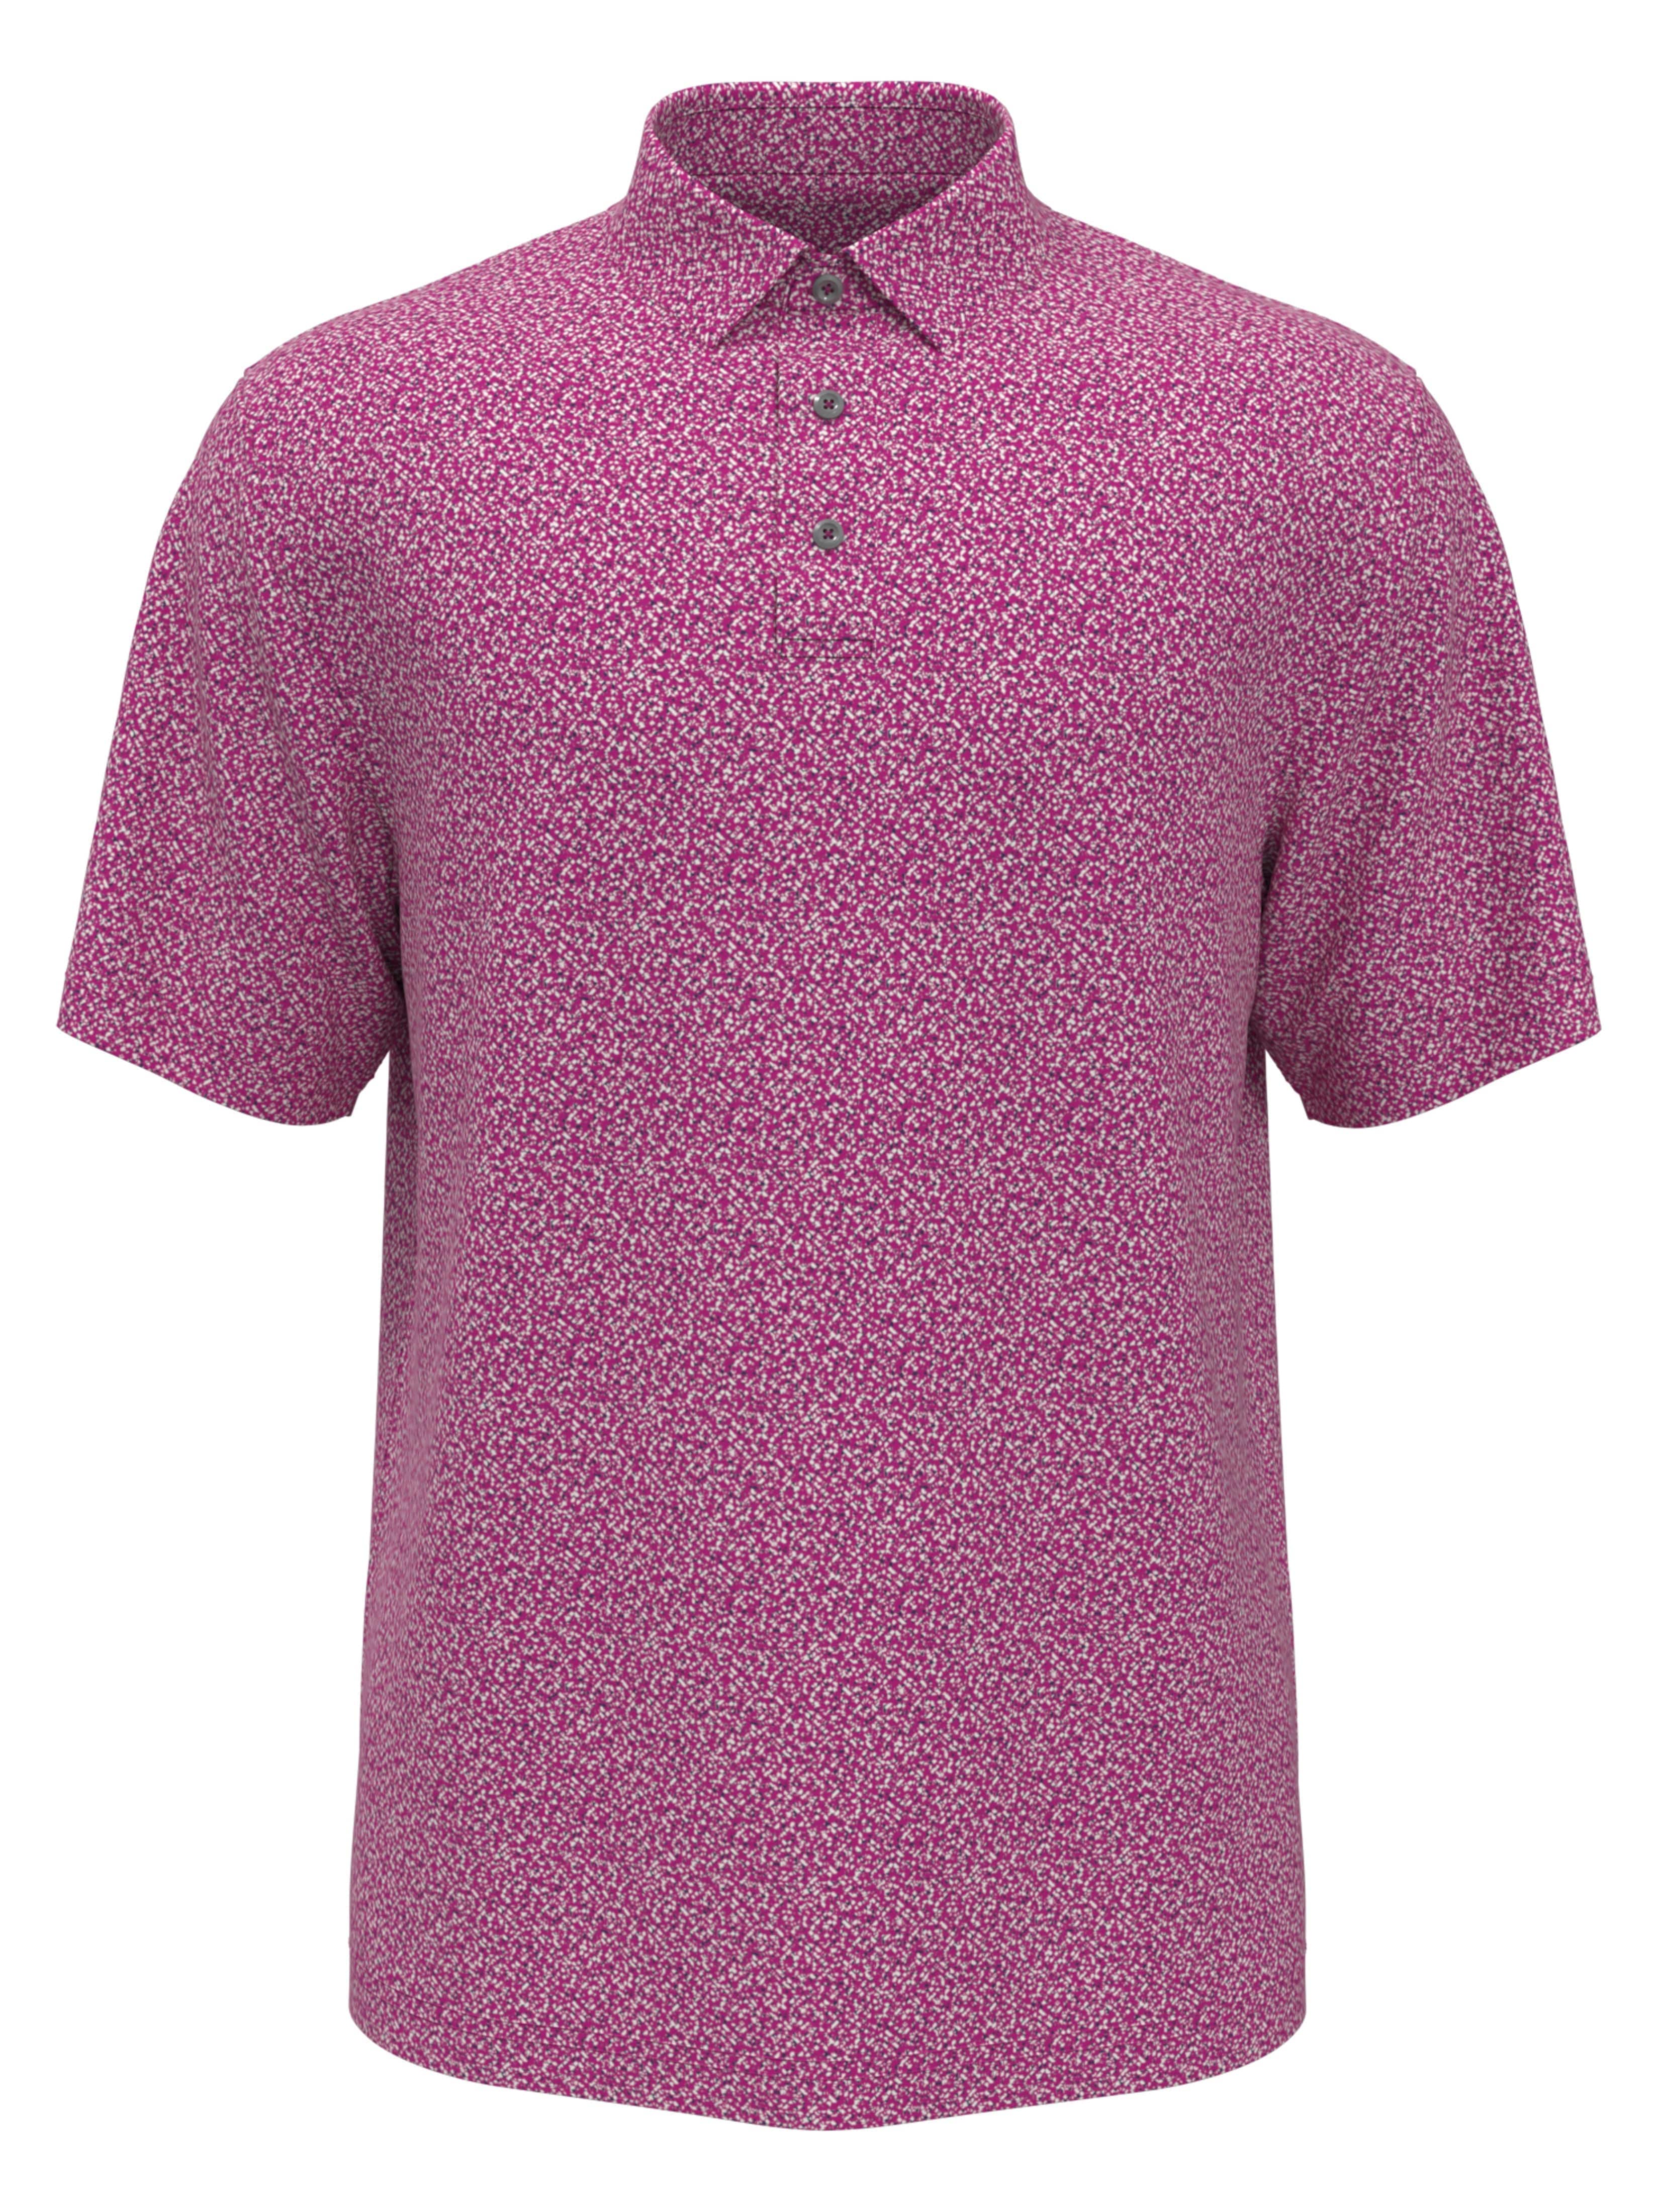 PGA TOUR Apparel Boys Micro Geo Printed Golf Polo Shirt, Size Medium, Rose Violet Pink, 100% Polyester | Golf Apparel Shop